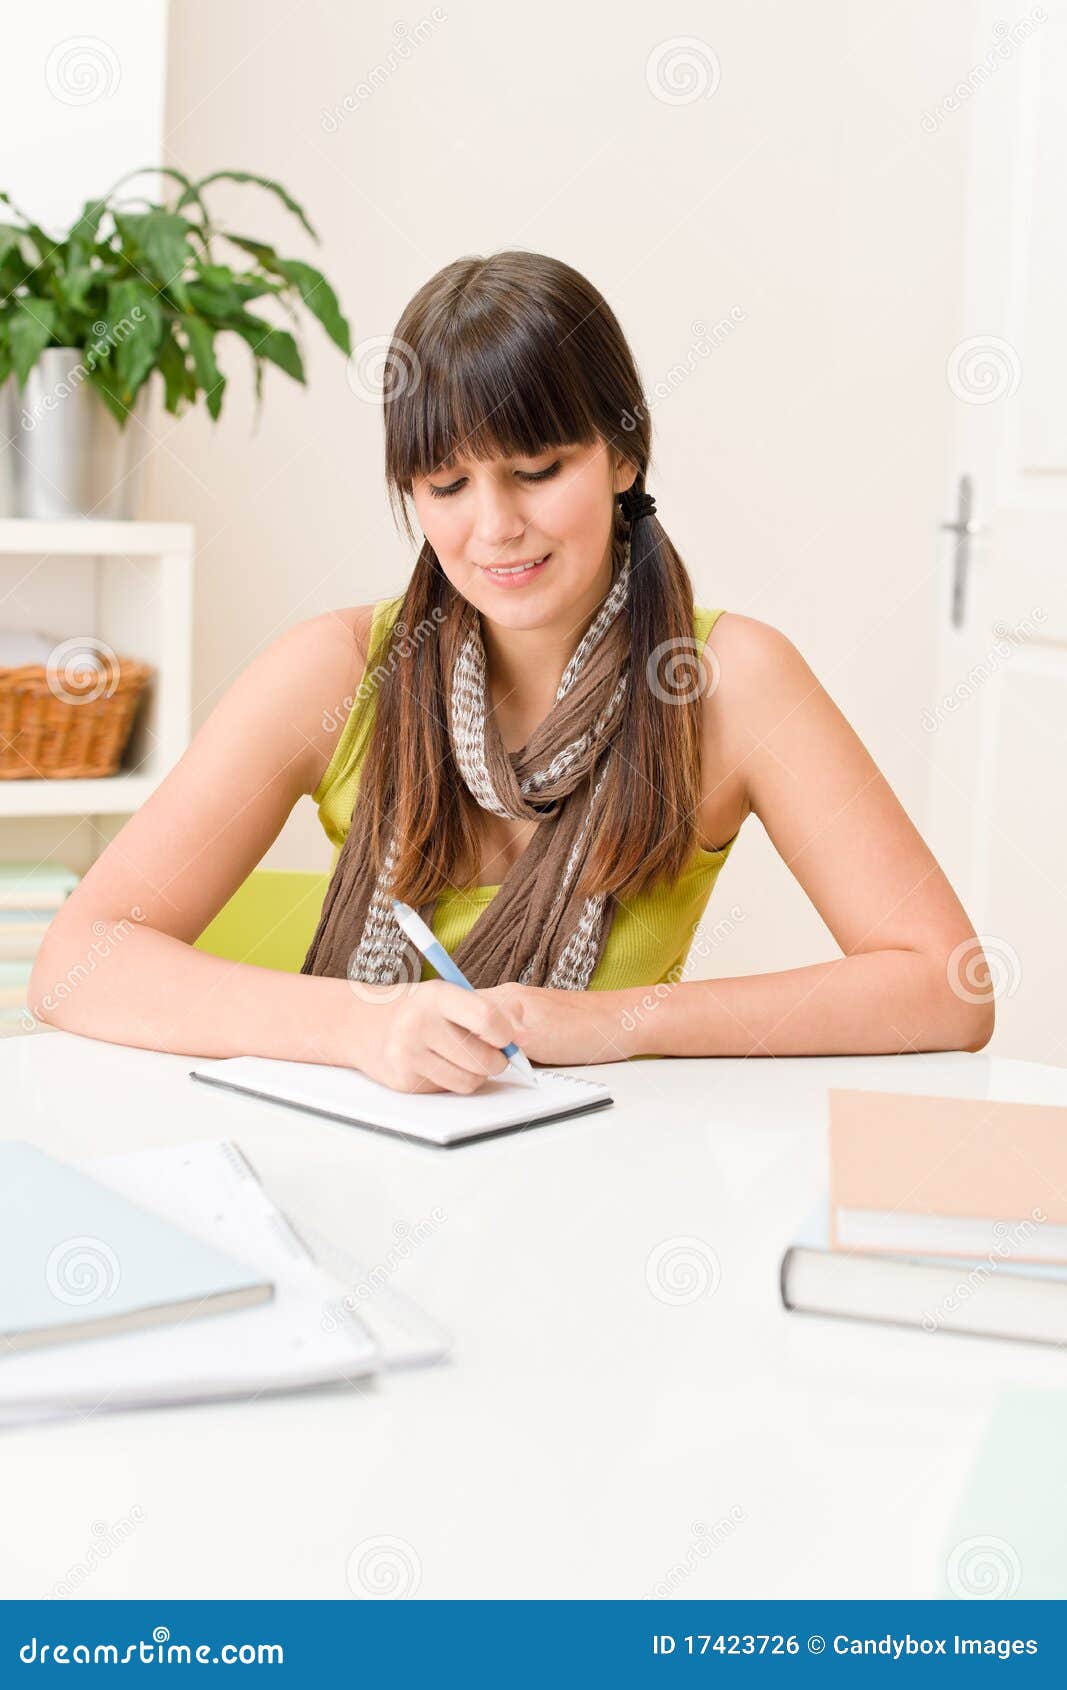 write in homework